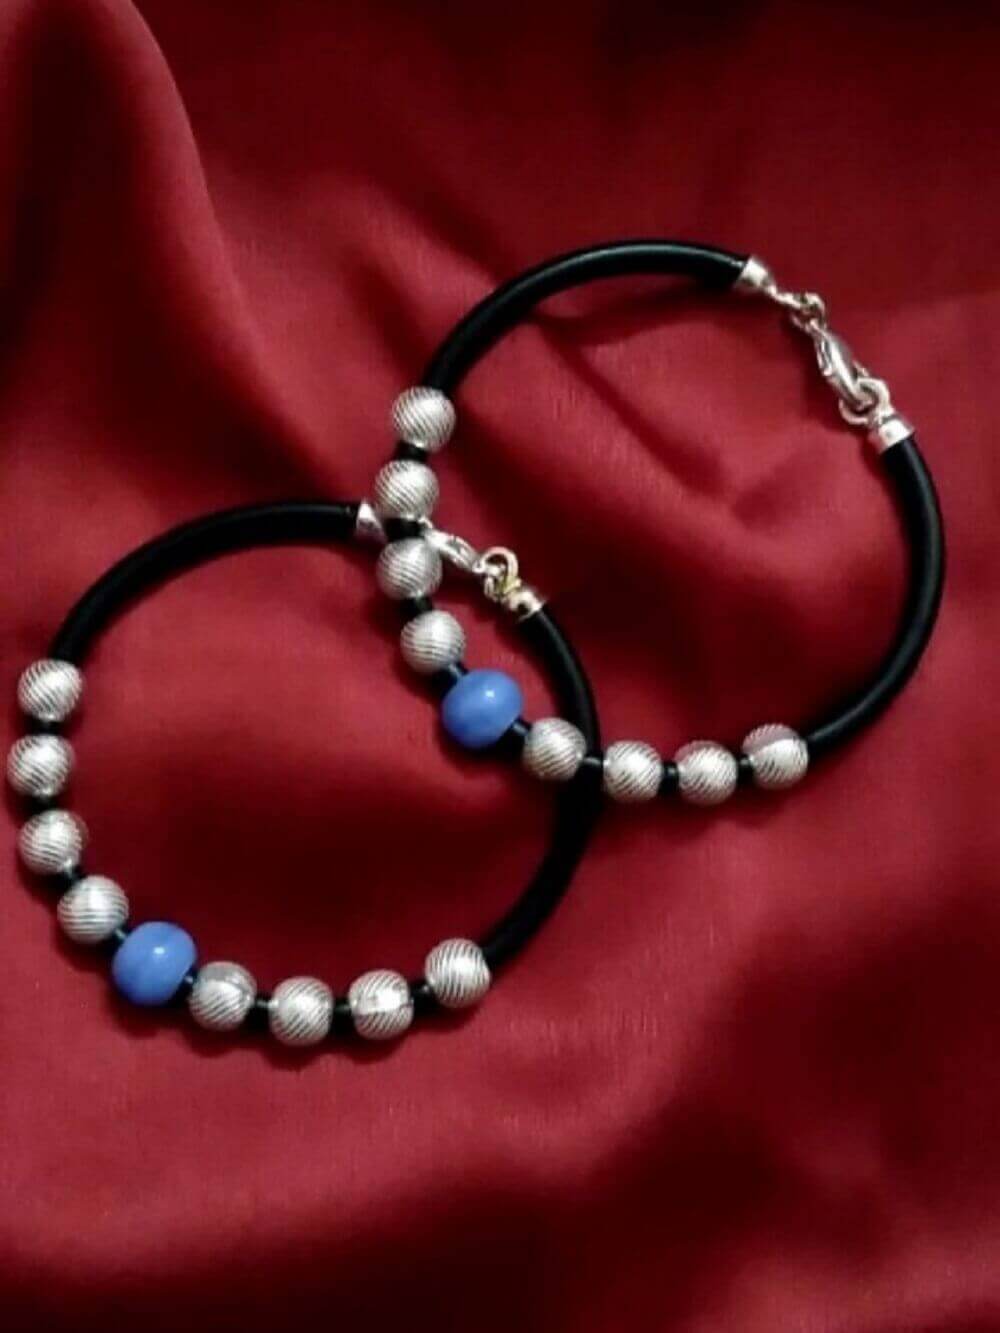 Black beads bangle